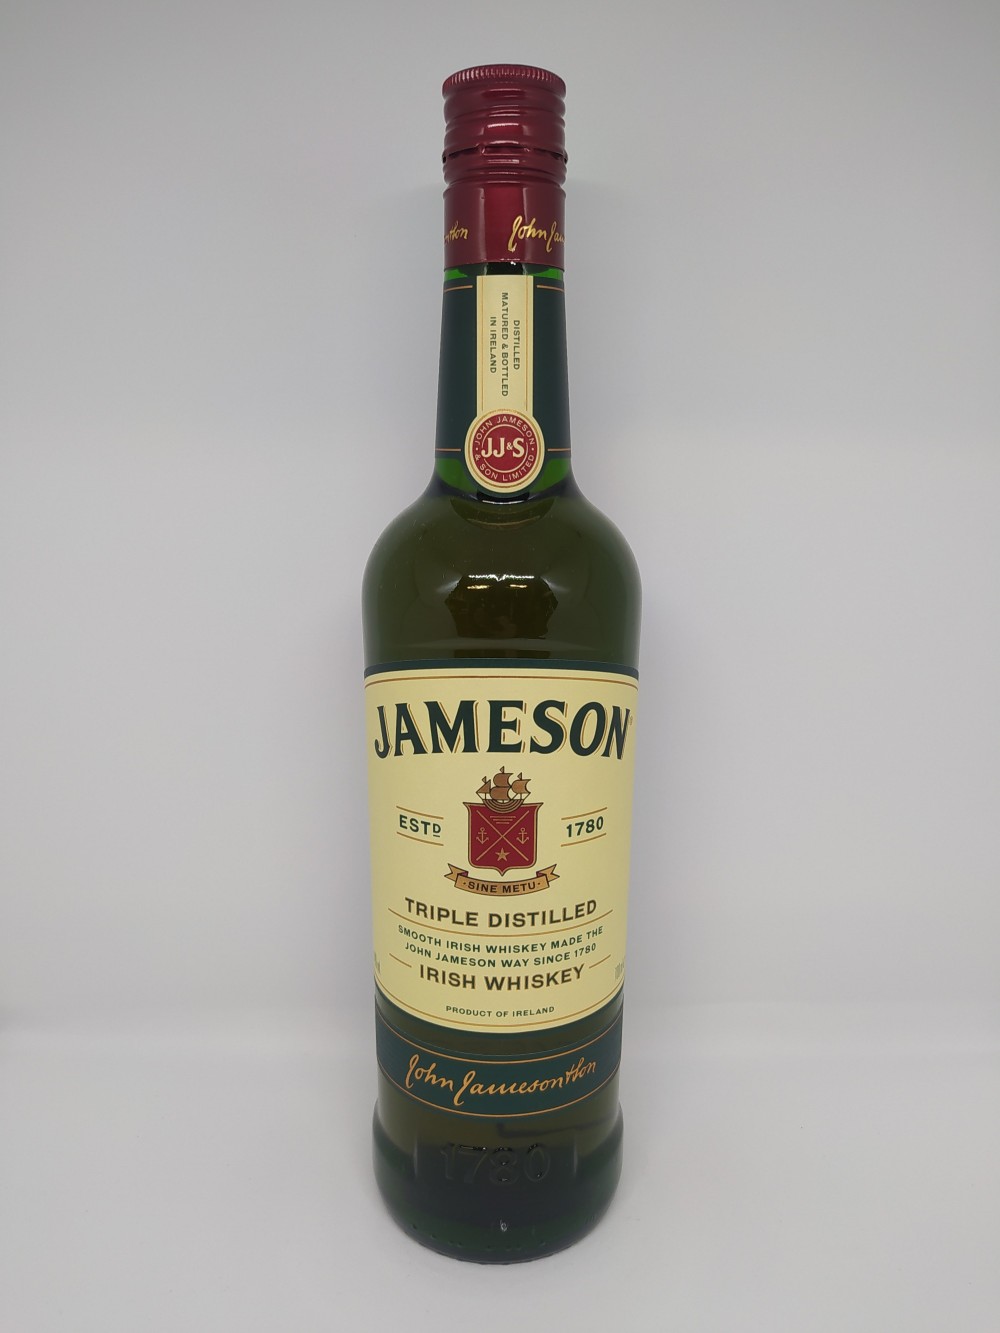 Jameson whisky 40% 0,7l